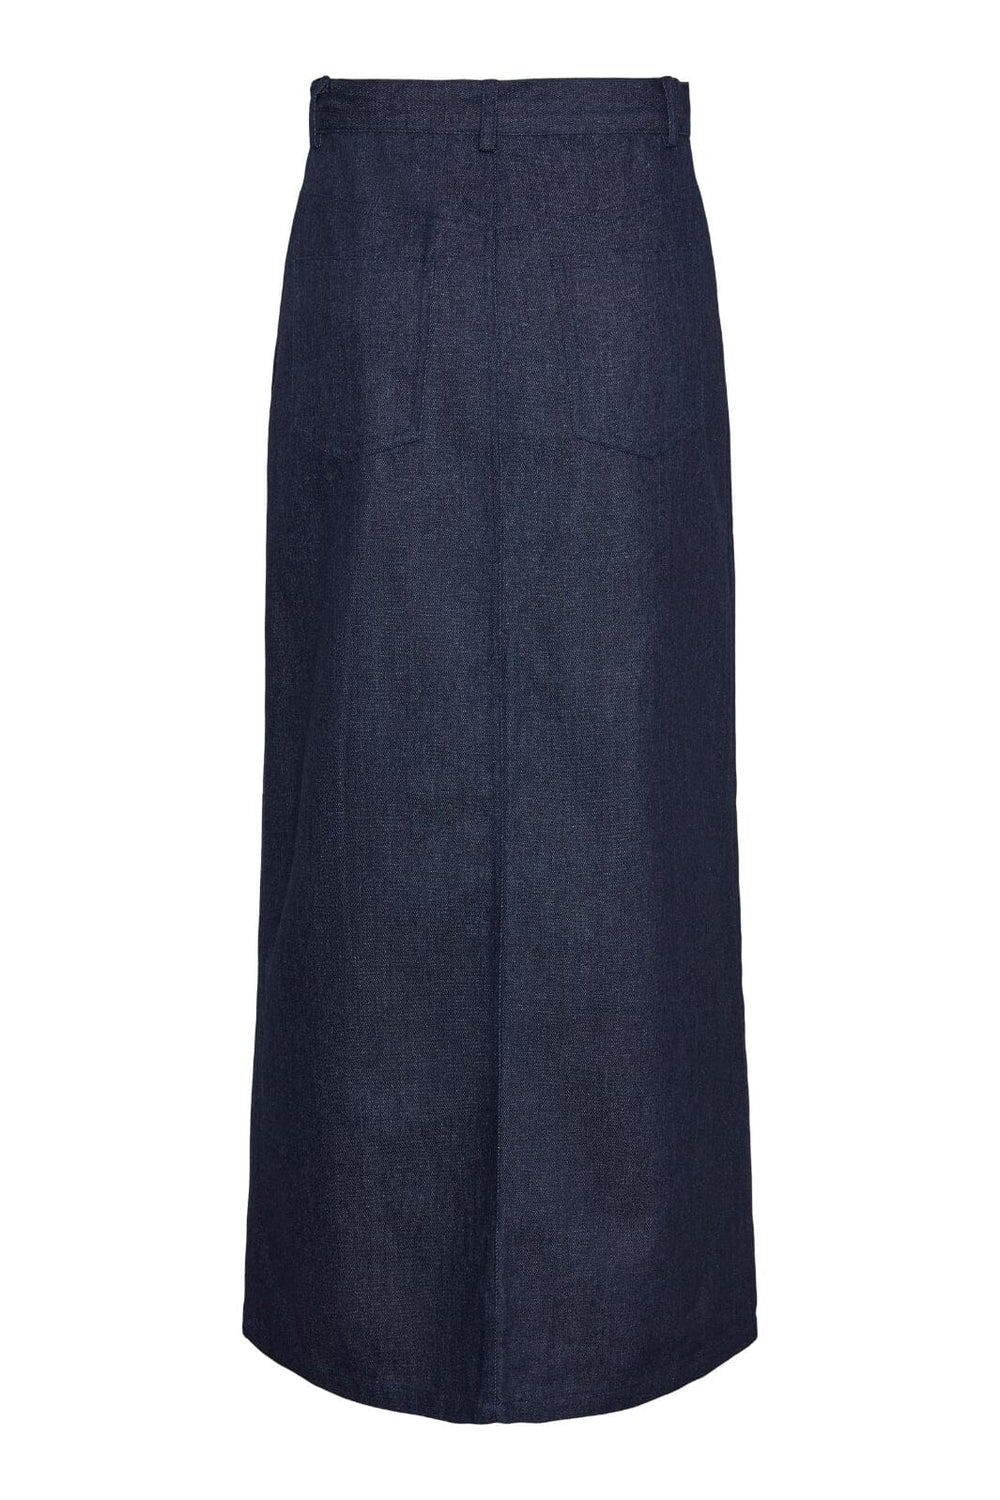 Pieces - Pcasta Long Skirt - 4503123 Dark Blue Denim Nederdele 